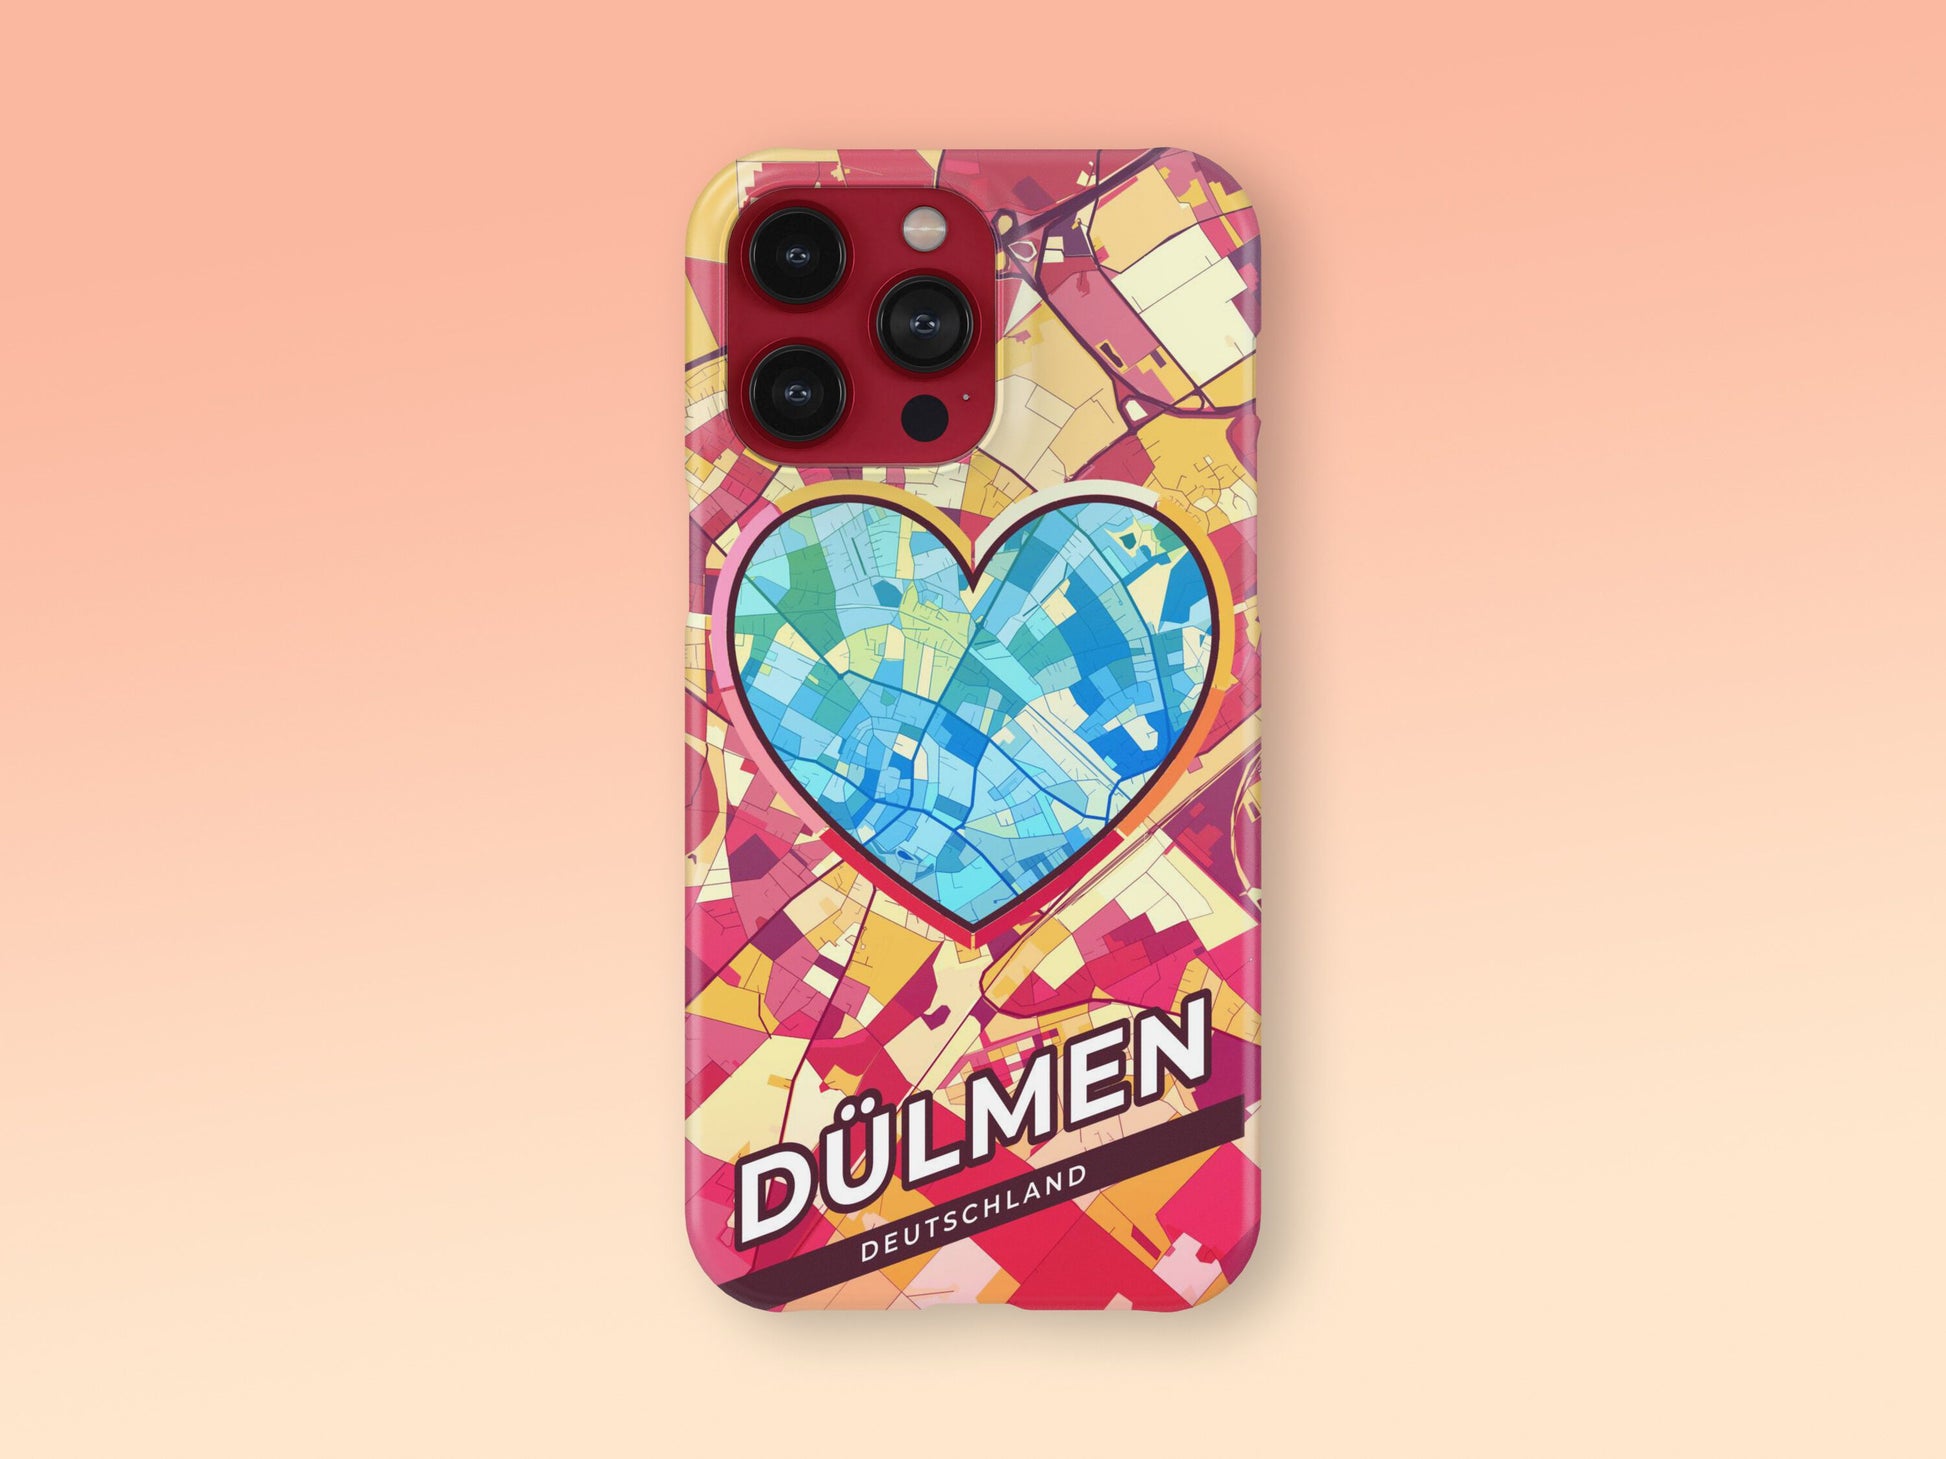 Dülmen Deutschland slim phone case with colorful icon. Birthday, wedding or housewarming gift. Couple match cases. 2